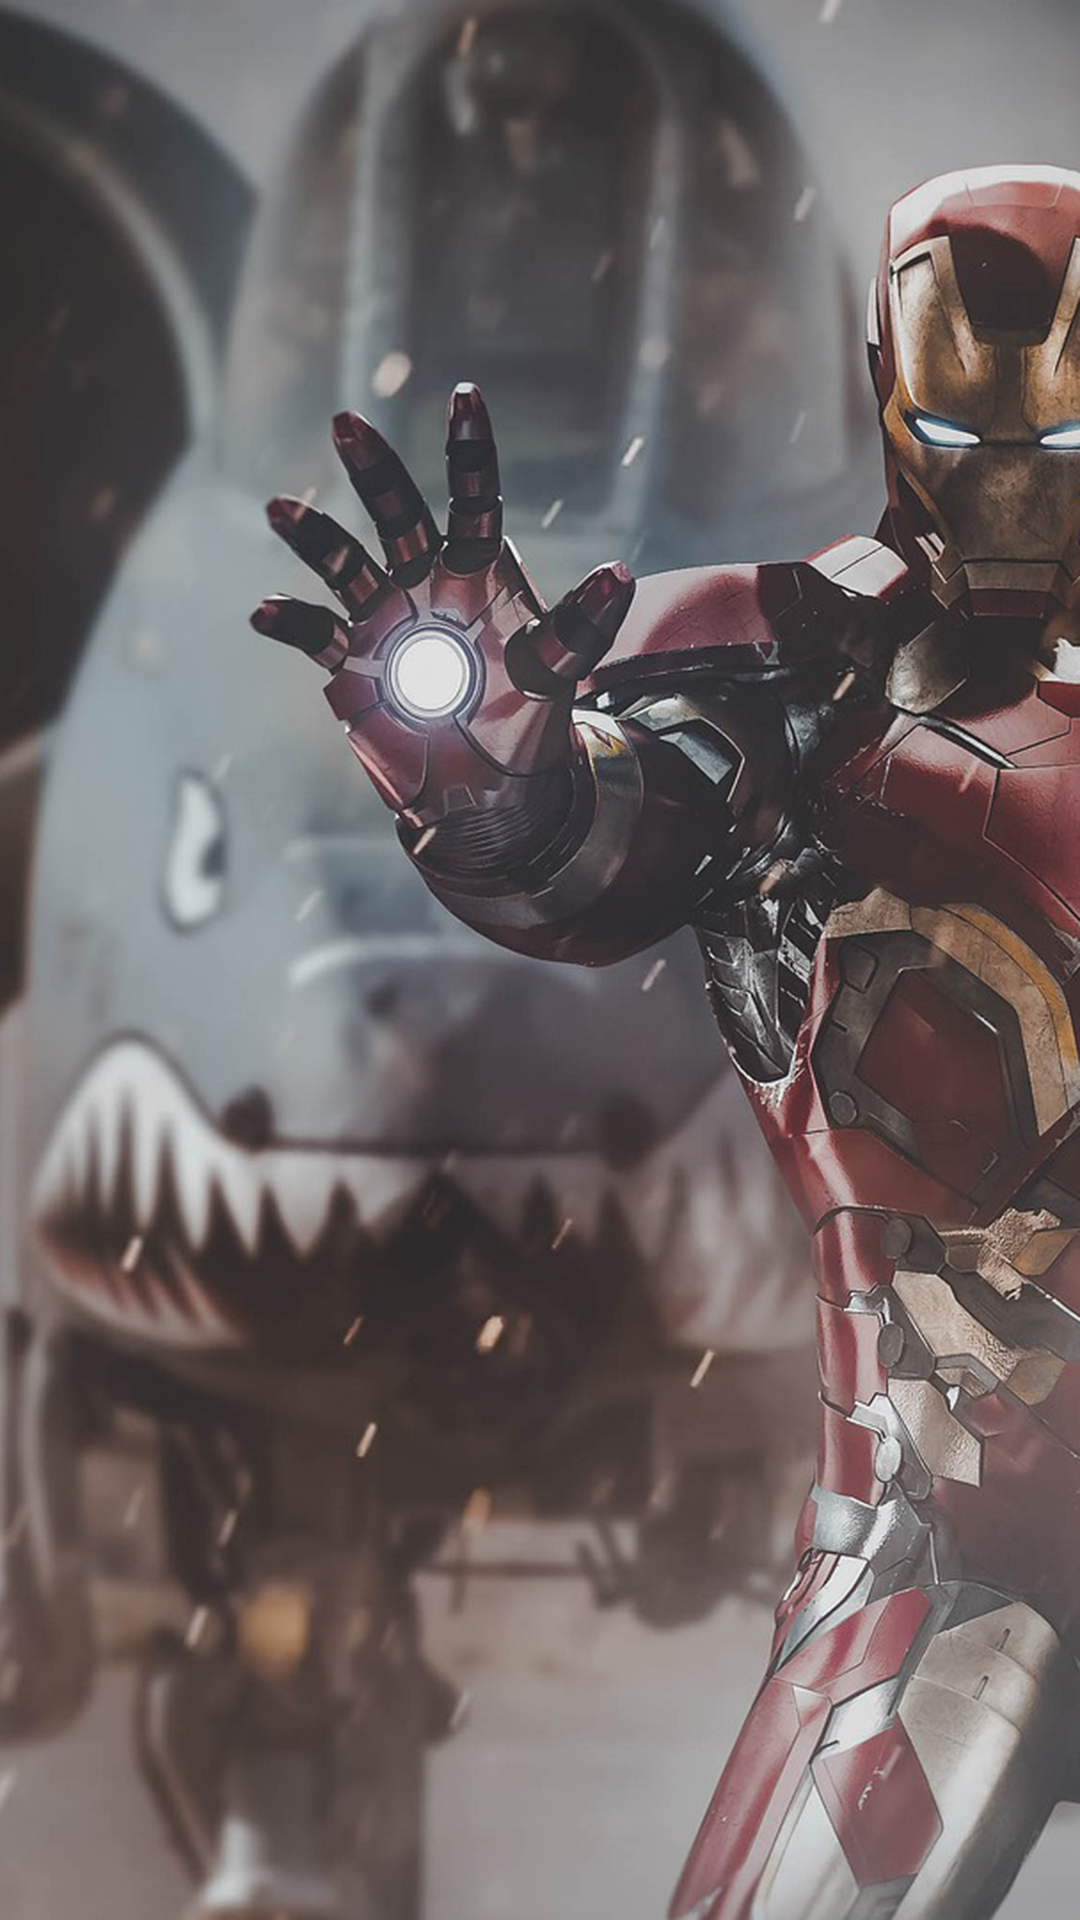 Iron man, Tony Stark, TC McCarthy's favorite billionaire, playboy, philanthropist superhero